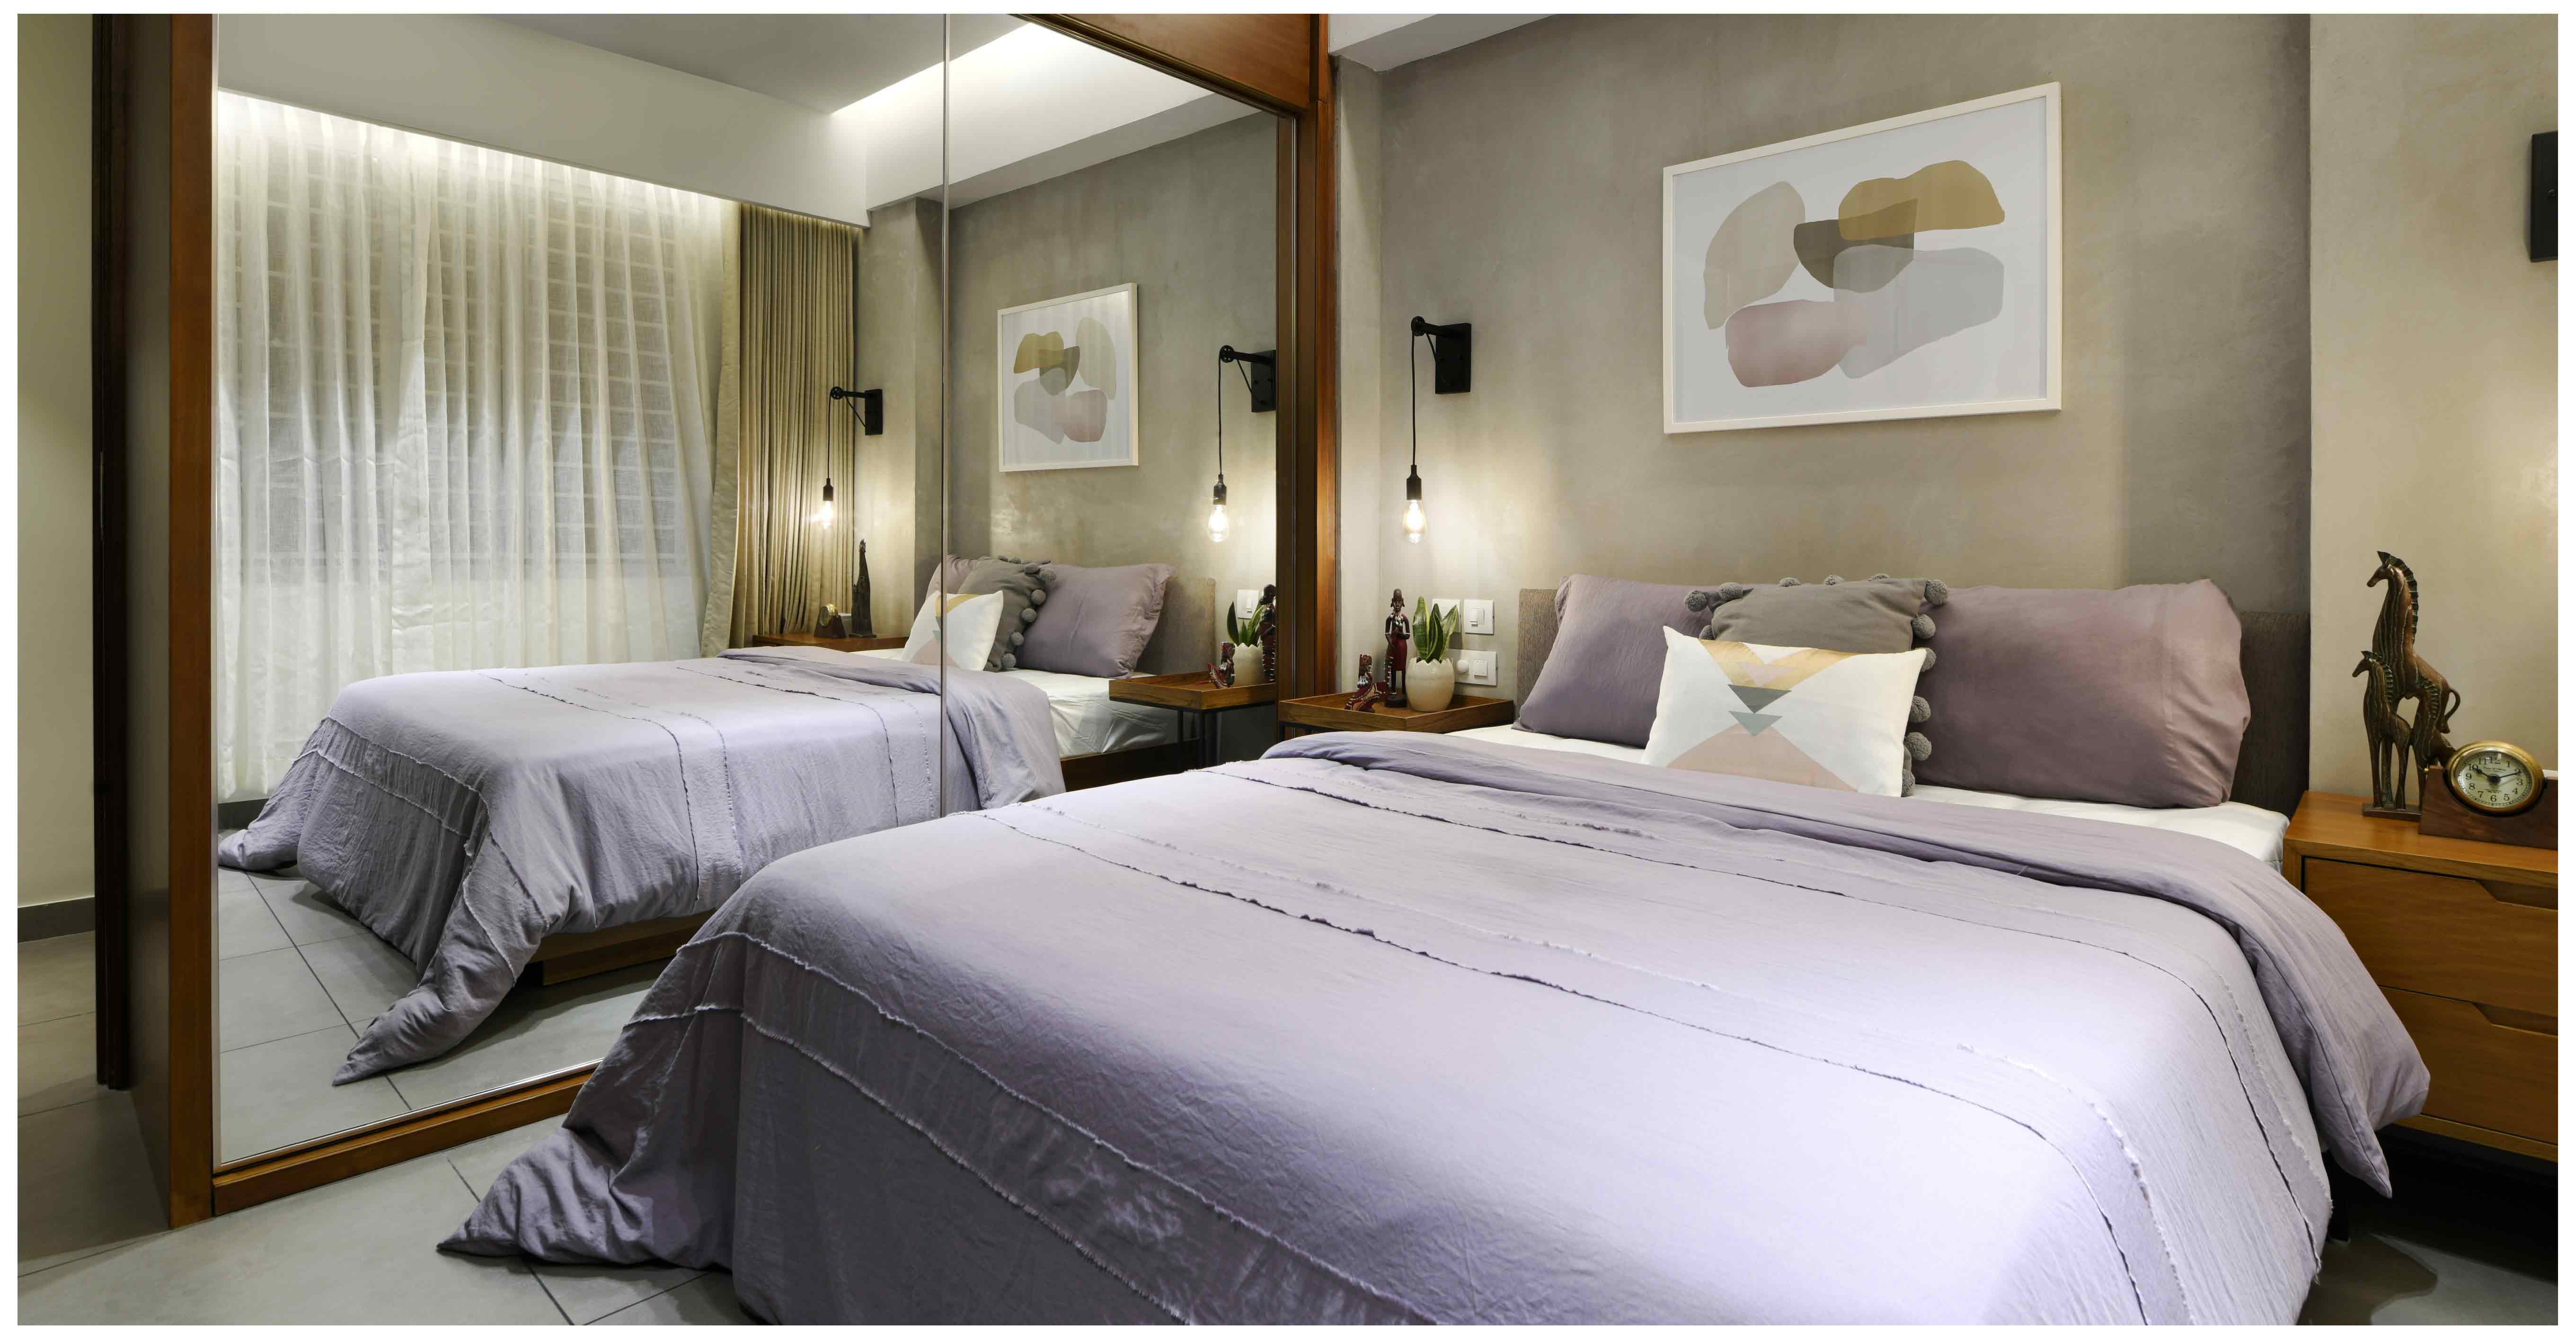 Stylish bedroom interior design by Kochi-shardes interior designers